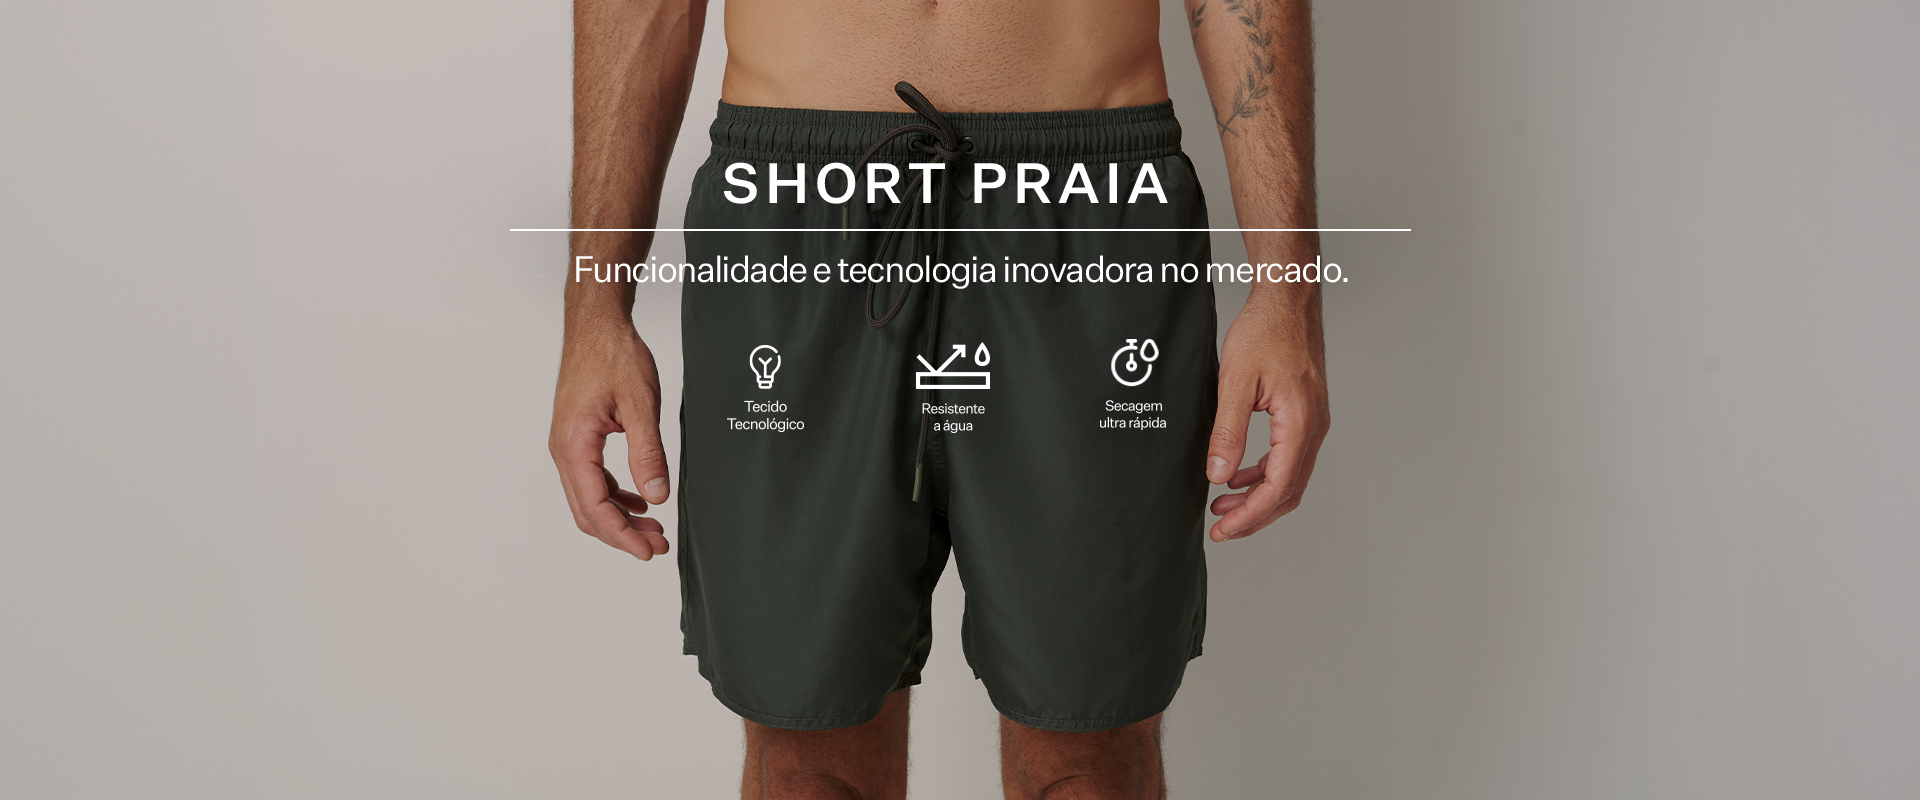 Banner_Short_Praia.png